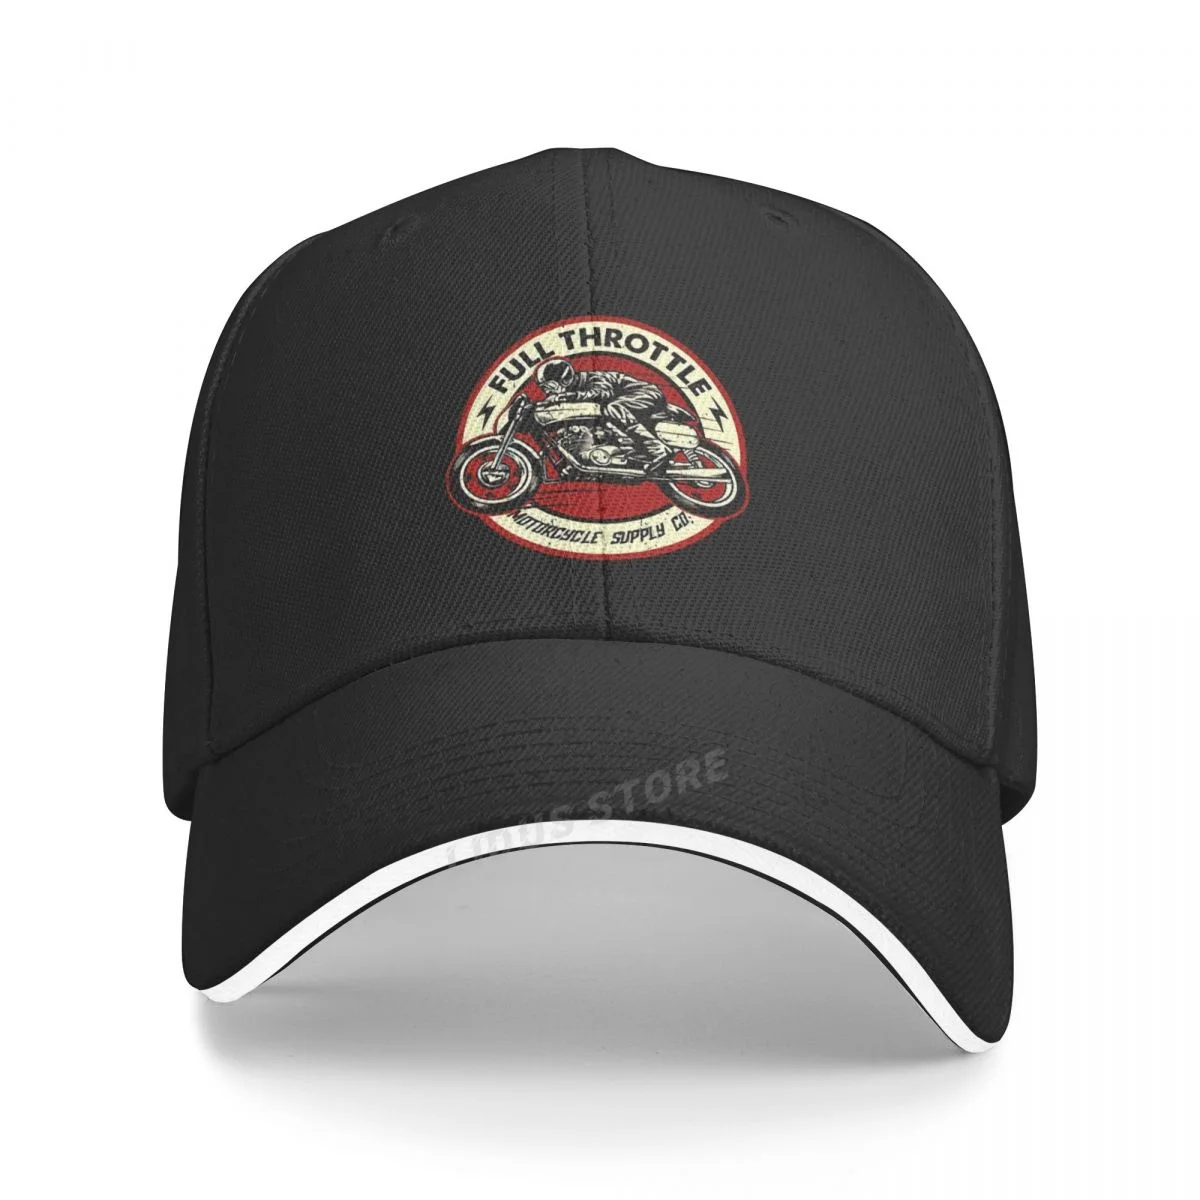 

Full Throttle Cafe Racer Rockabilly Biker Baseball Cap Outdoor Riding Hats Breathable Unisex Cotton Snapback Hat